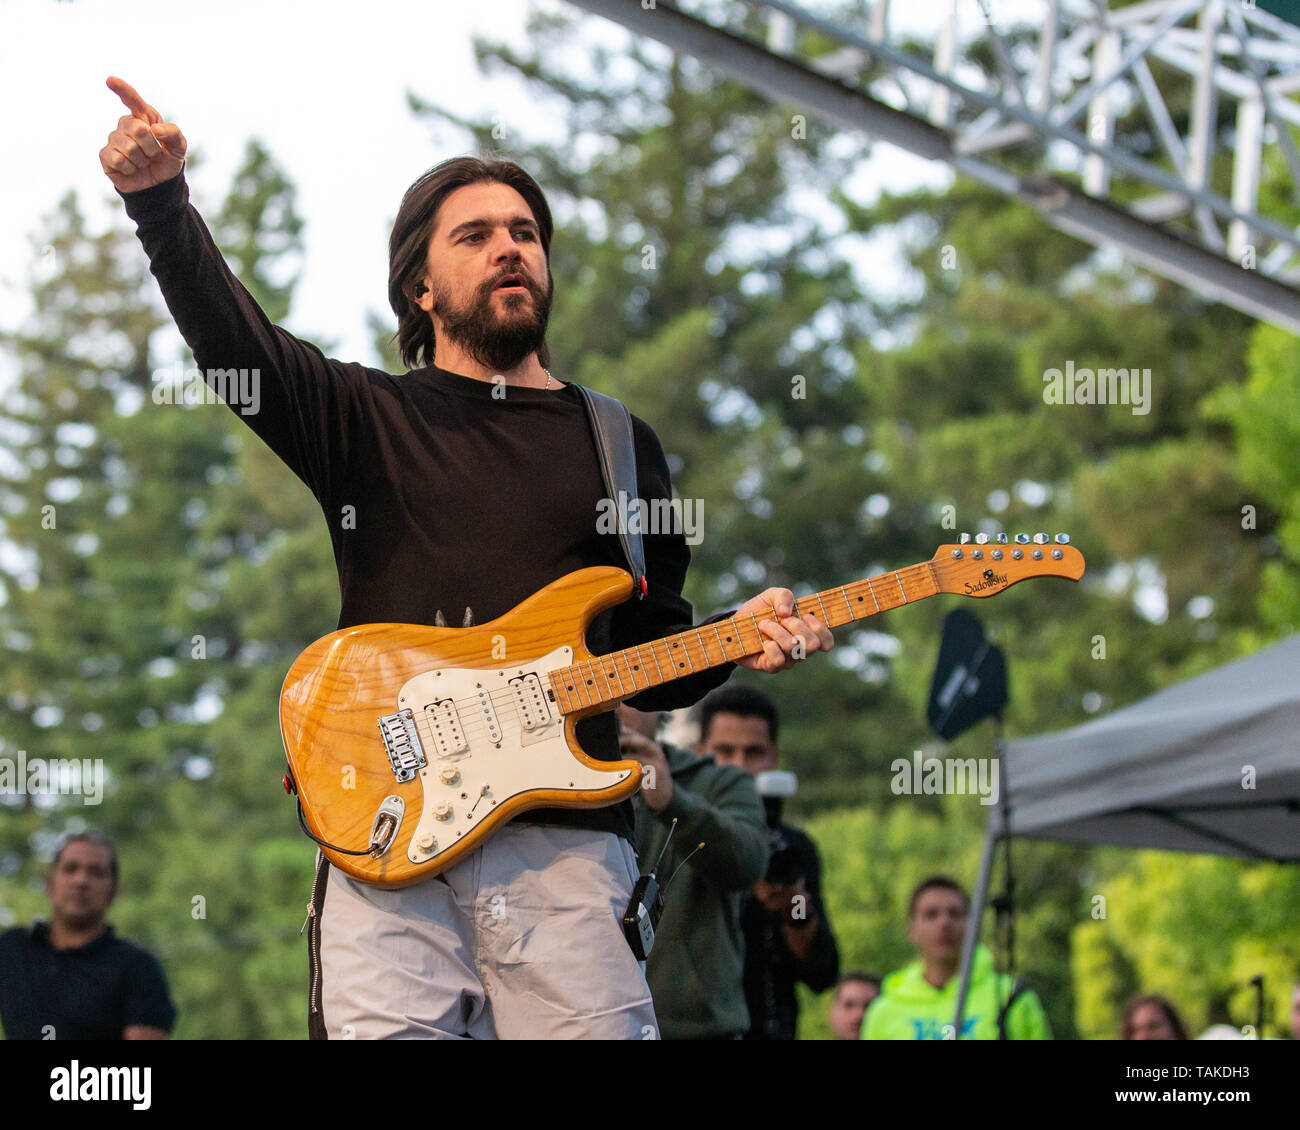 May 25, 2019 - Napa, California, U.S - Latin musician JUANES (JUAN ESTEBAN ARISTIZABAL VASQUEZ) during the BottleRock Music Festival in Napa, California (Credit Image: © Daniel DeSlover/ZUMA Wire) Stock Photo